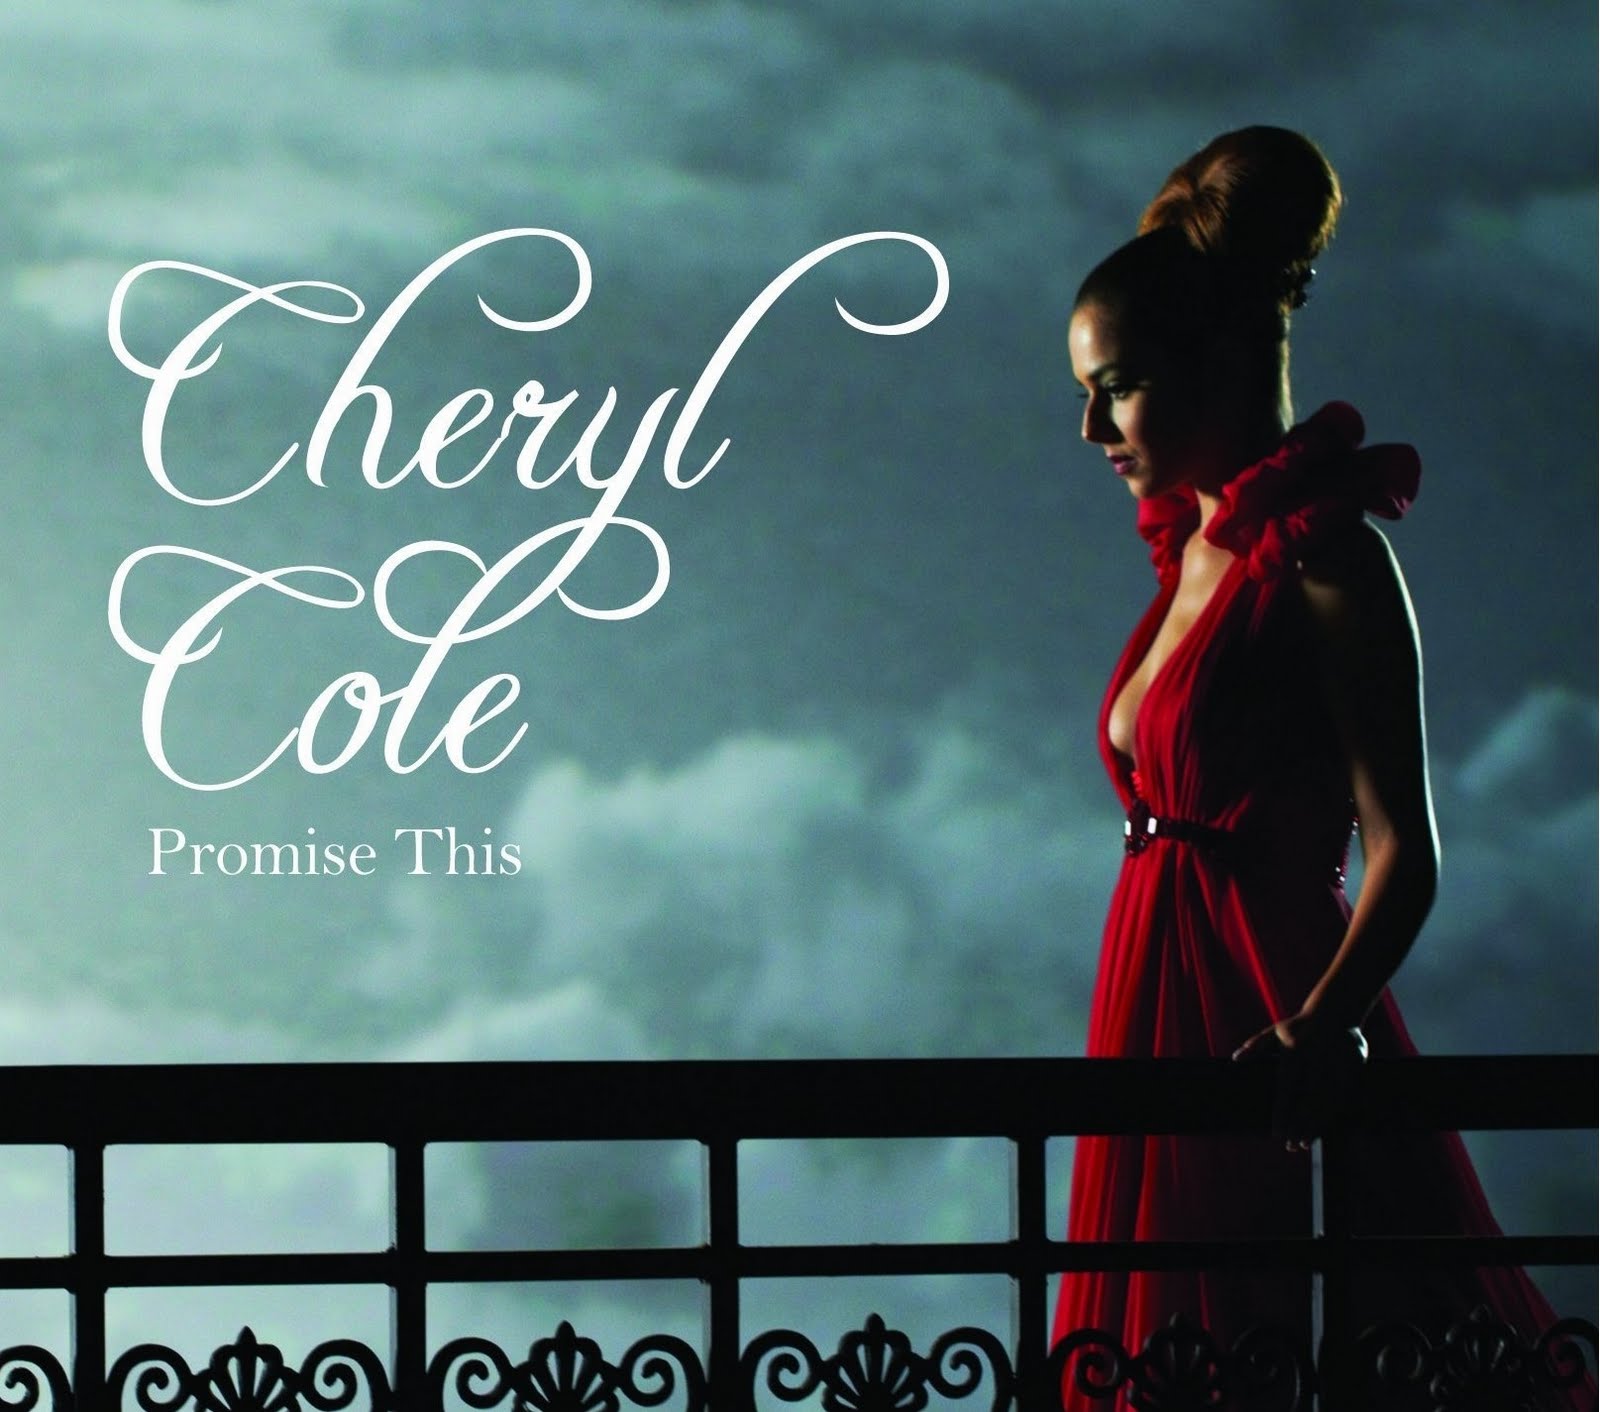 http://4.bp.blogspot.com/_bI5-8YnkkFA/TM1B3IEUfYI/AAAAAAAAE_w/guFRxtD-FhU/s1600/Cheryl+Cole+-+Promise+This.jpg